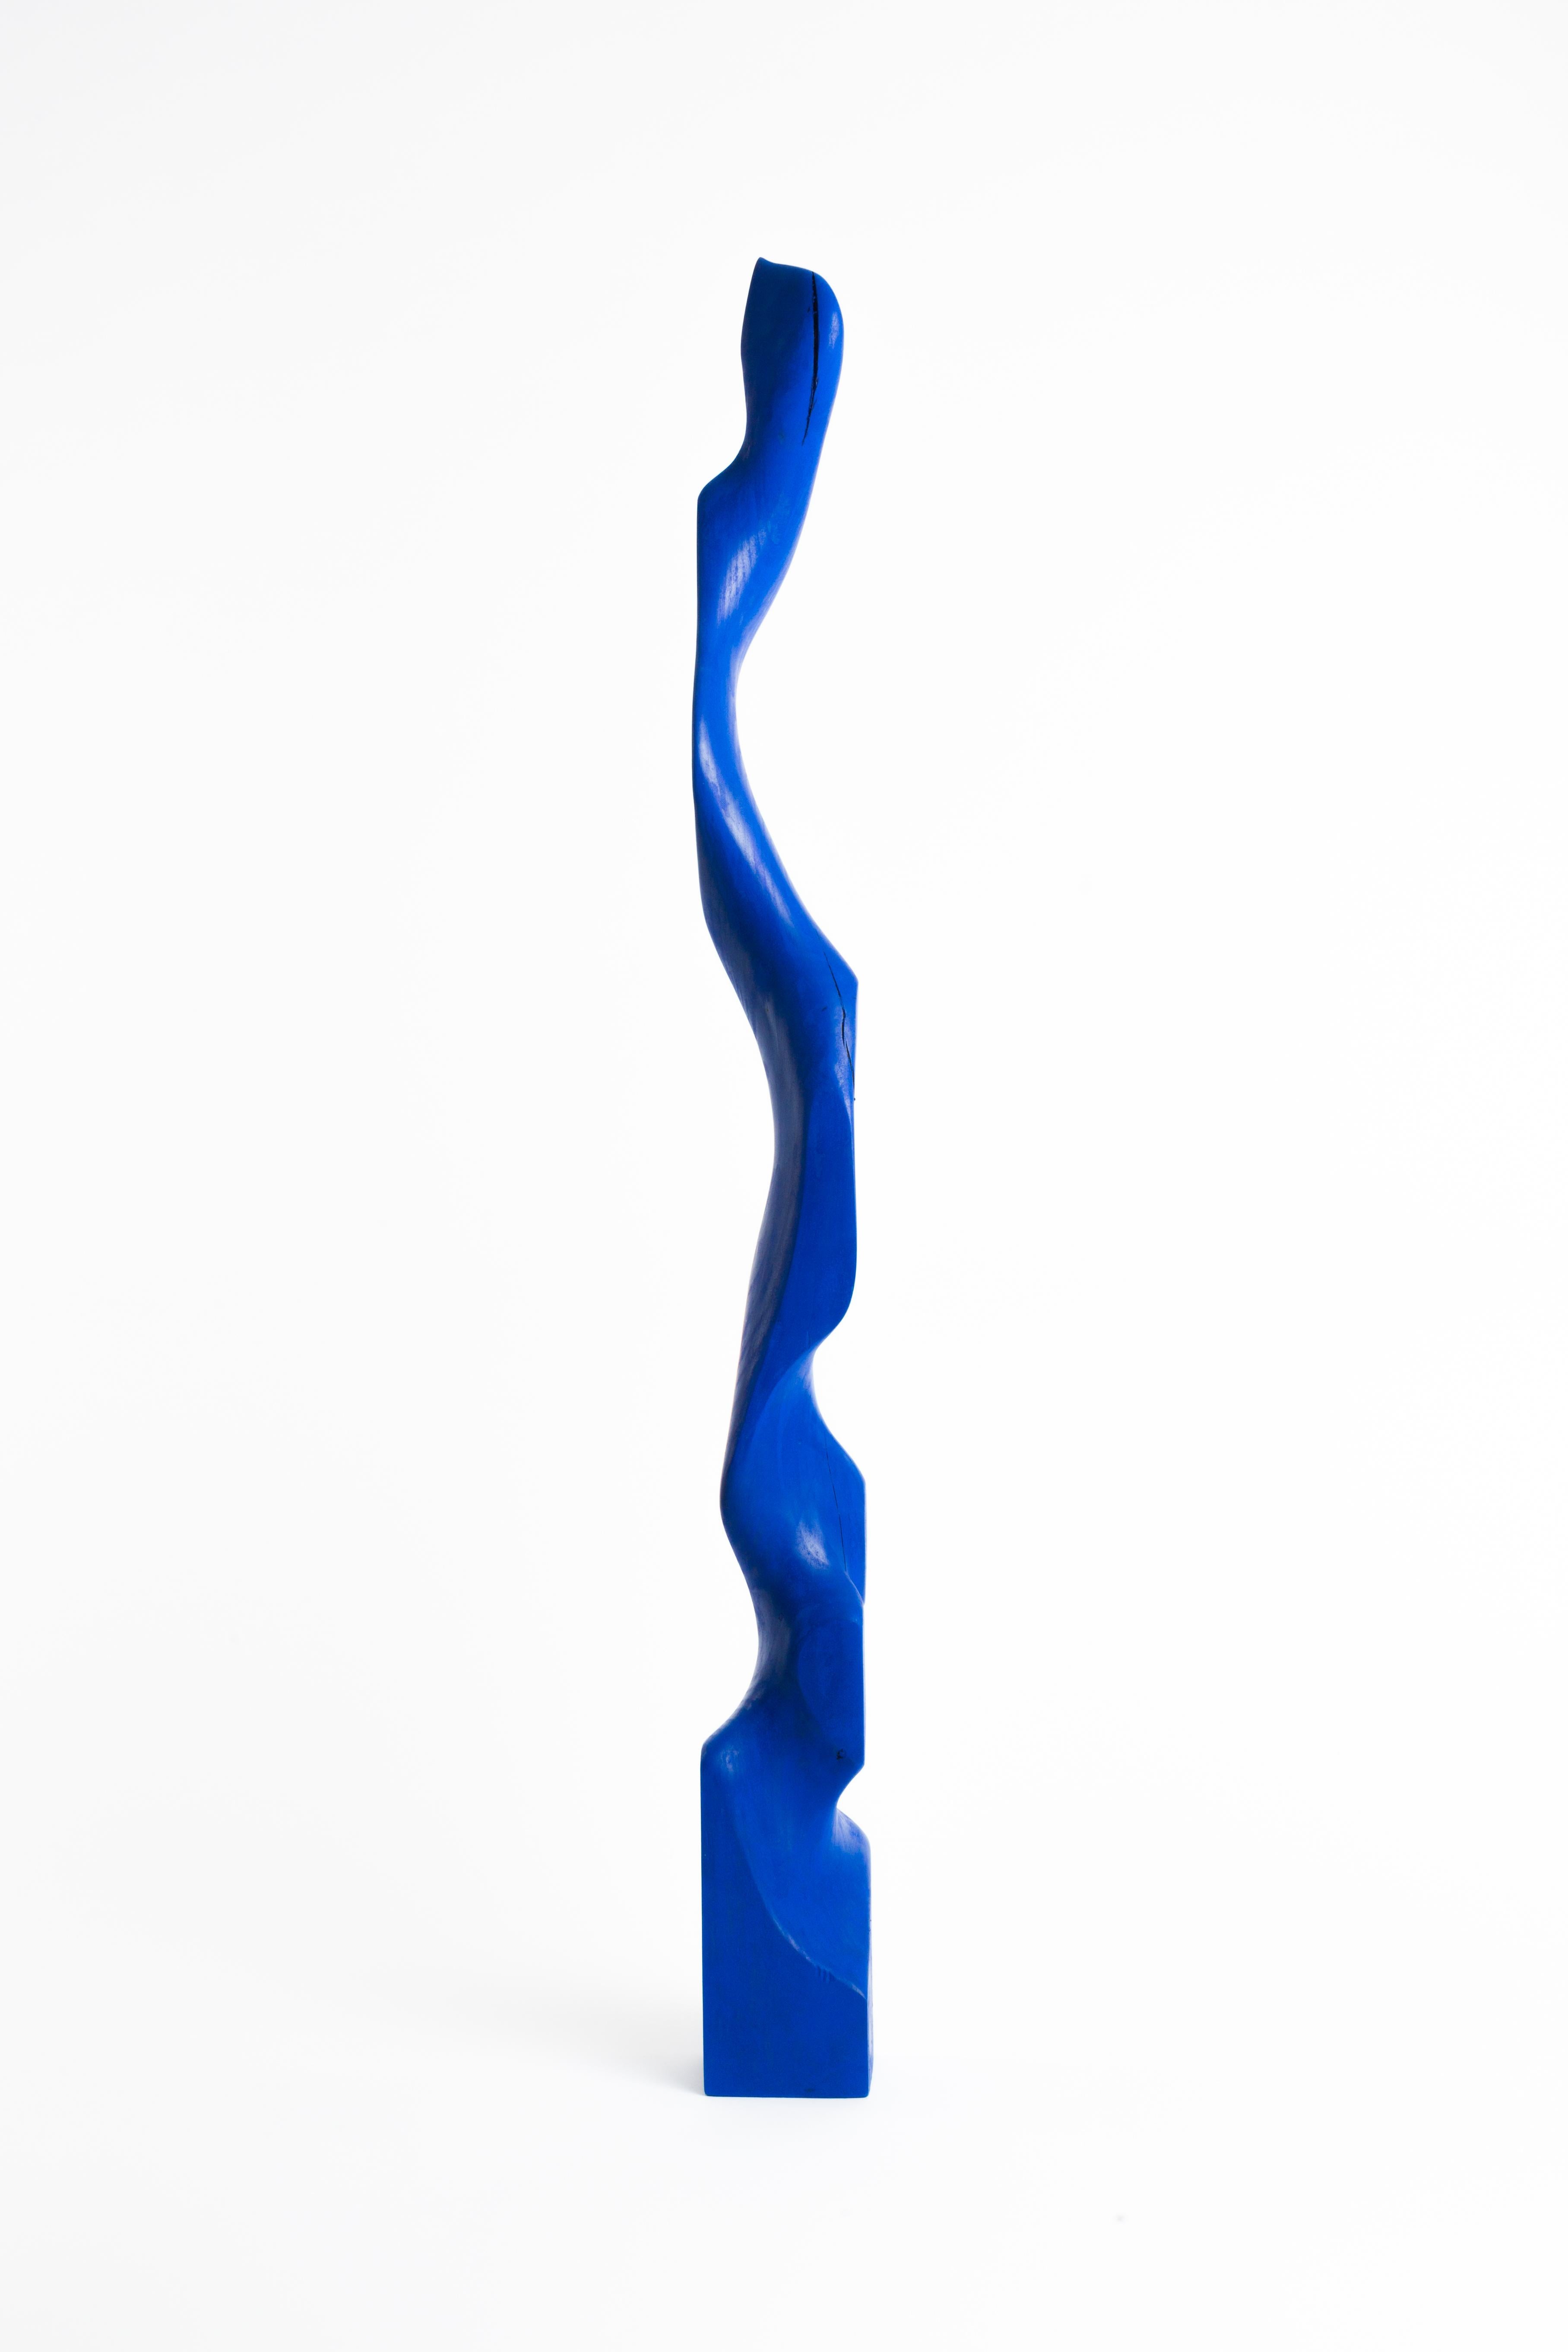 Driaan Claassen for Reticence, Abstract Geometric Sculpture, Wooden Cuboid 006 3